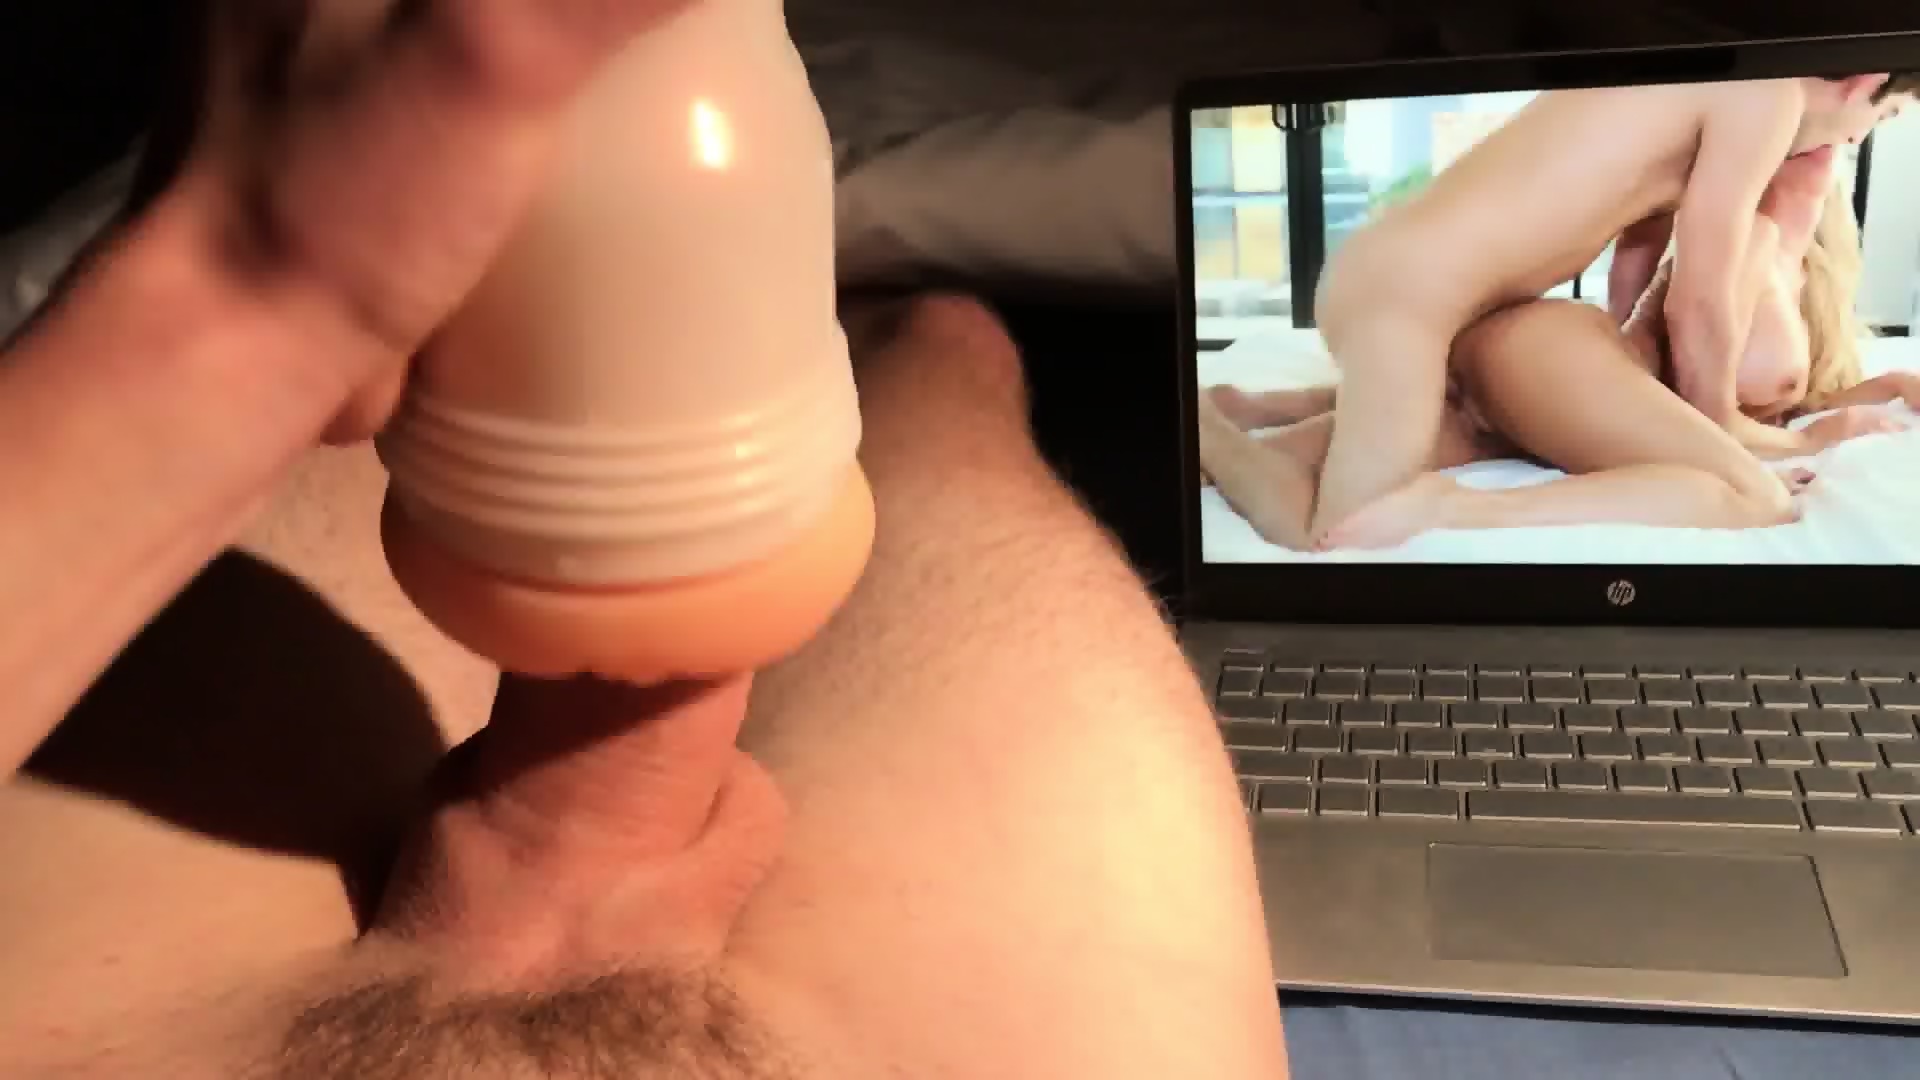 Fleshlight Watching - Fleshlight Masturbation While Watching Porn - EPORNER